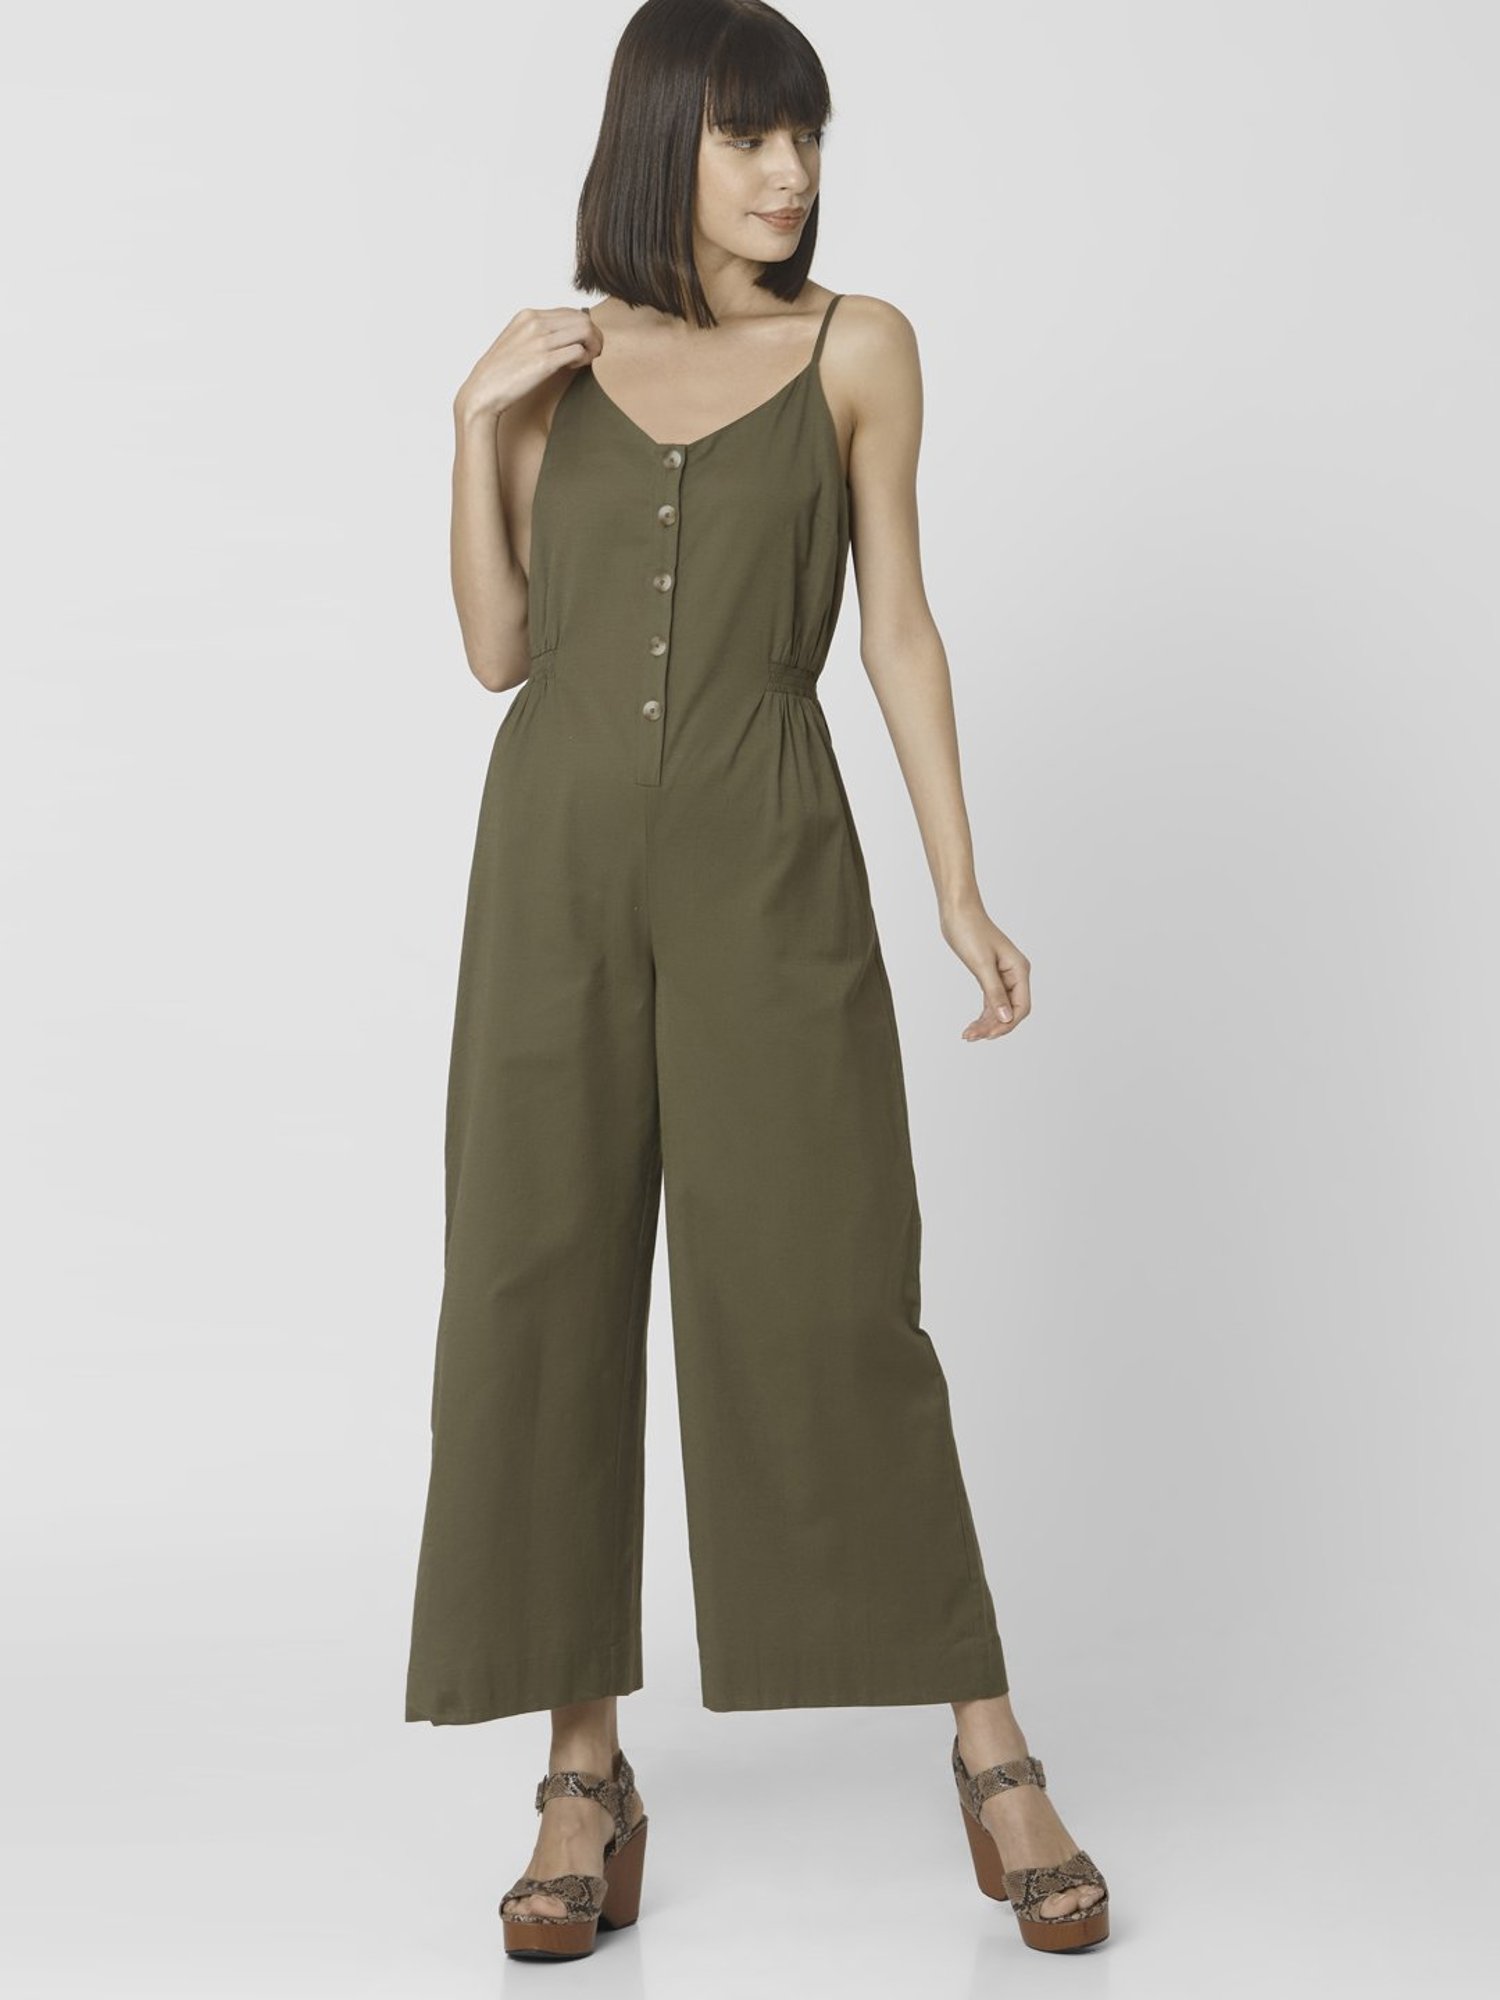 Buy Vero Moda Olive Green Cotton Jumpsuit for Women Online @ CLiQ